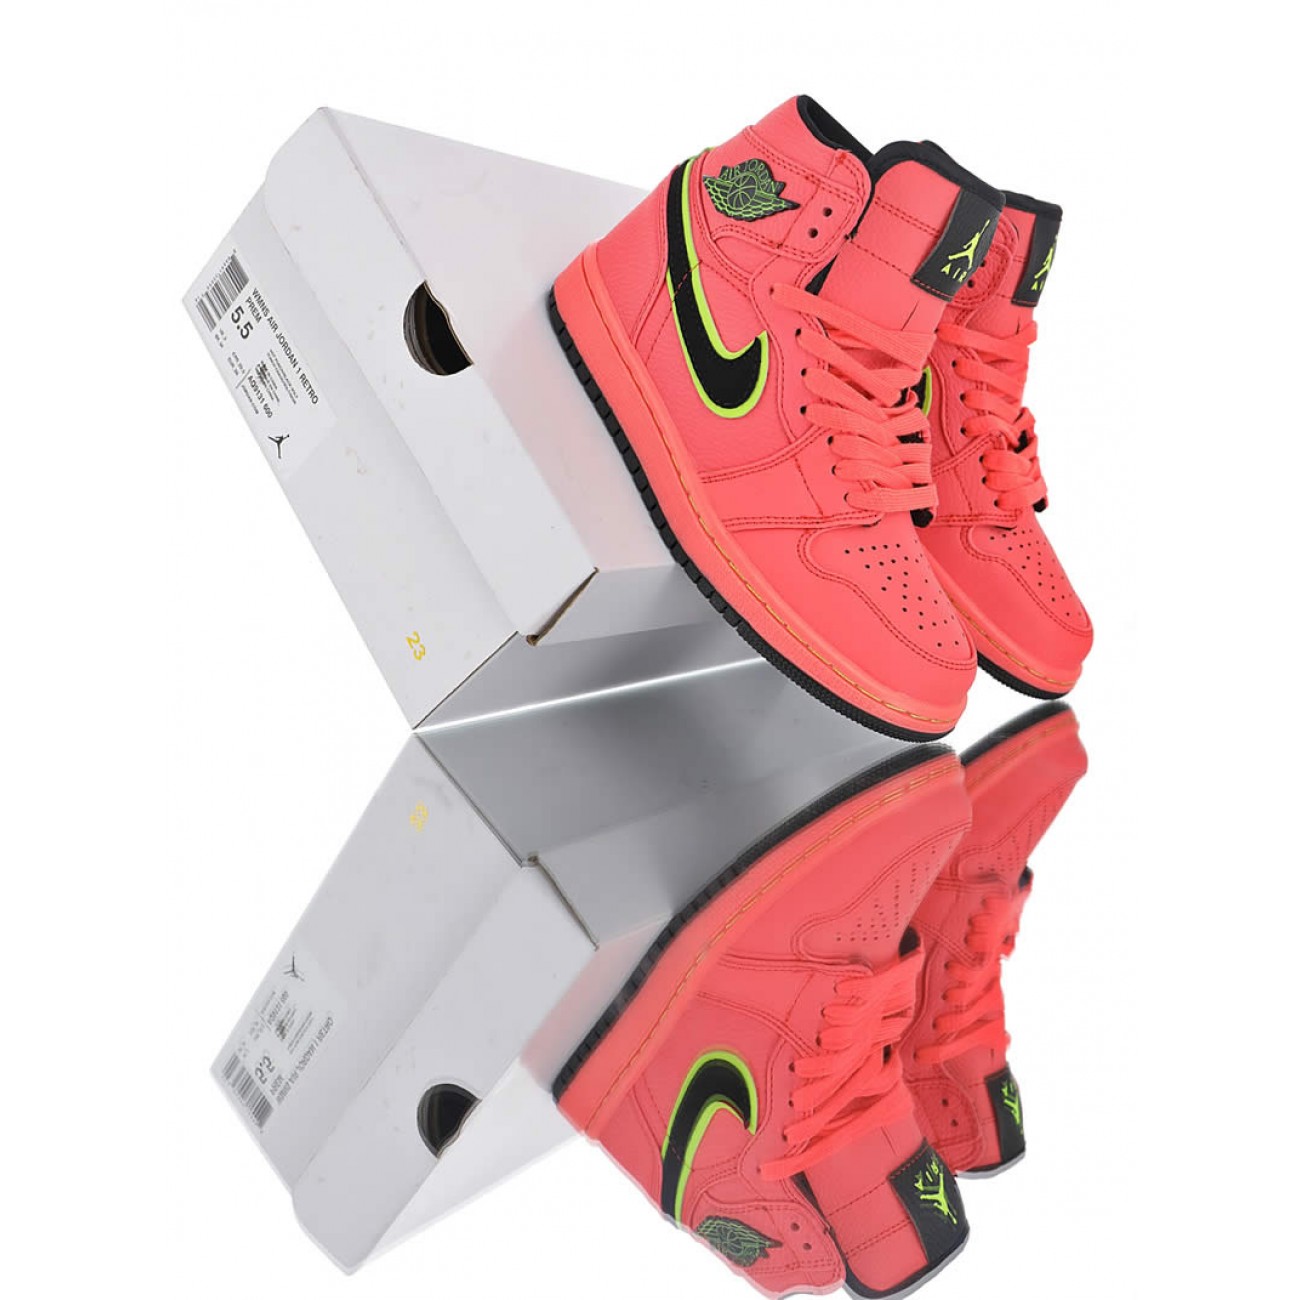 Air Jordan 1 Retro Premium "Hot Punch" Pink Womens AQ9131-600